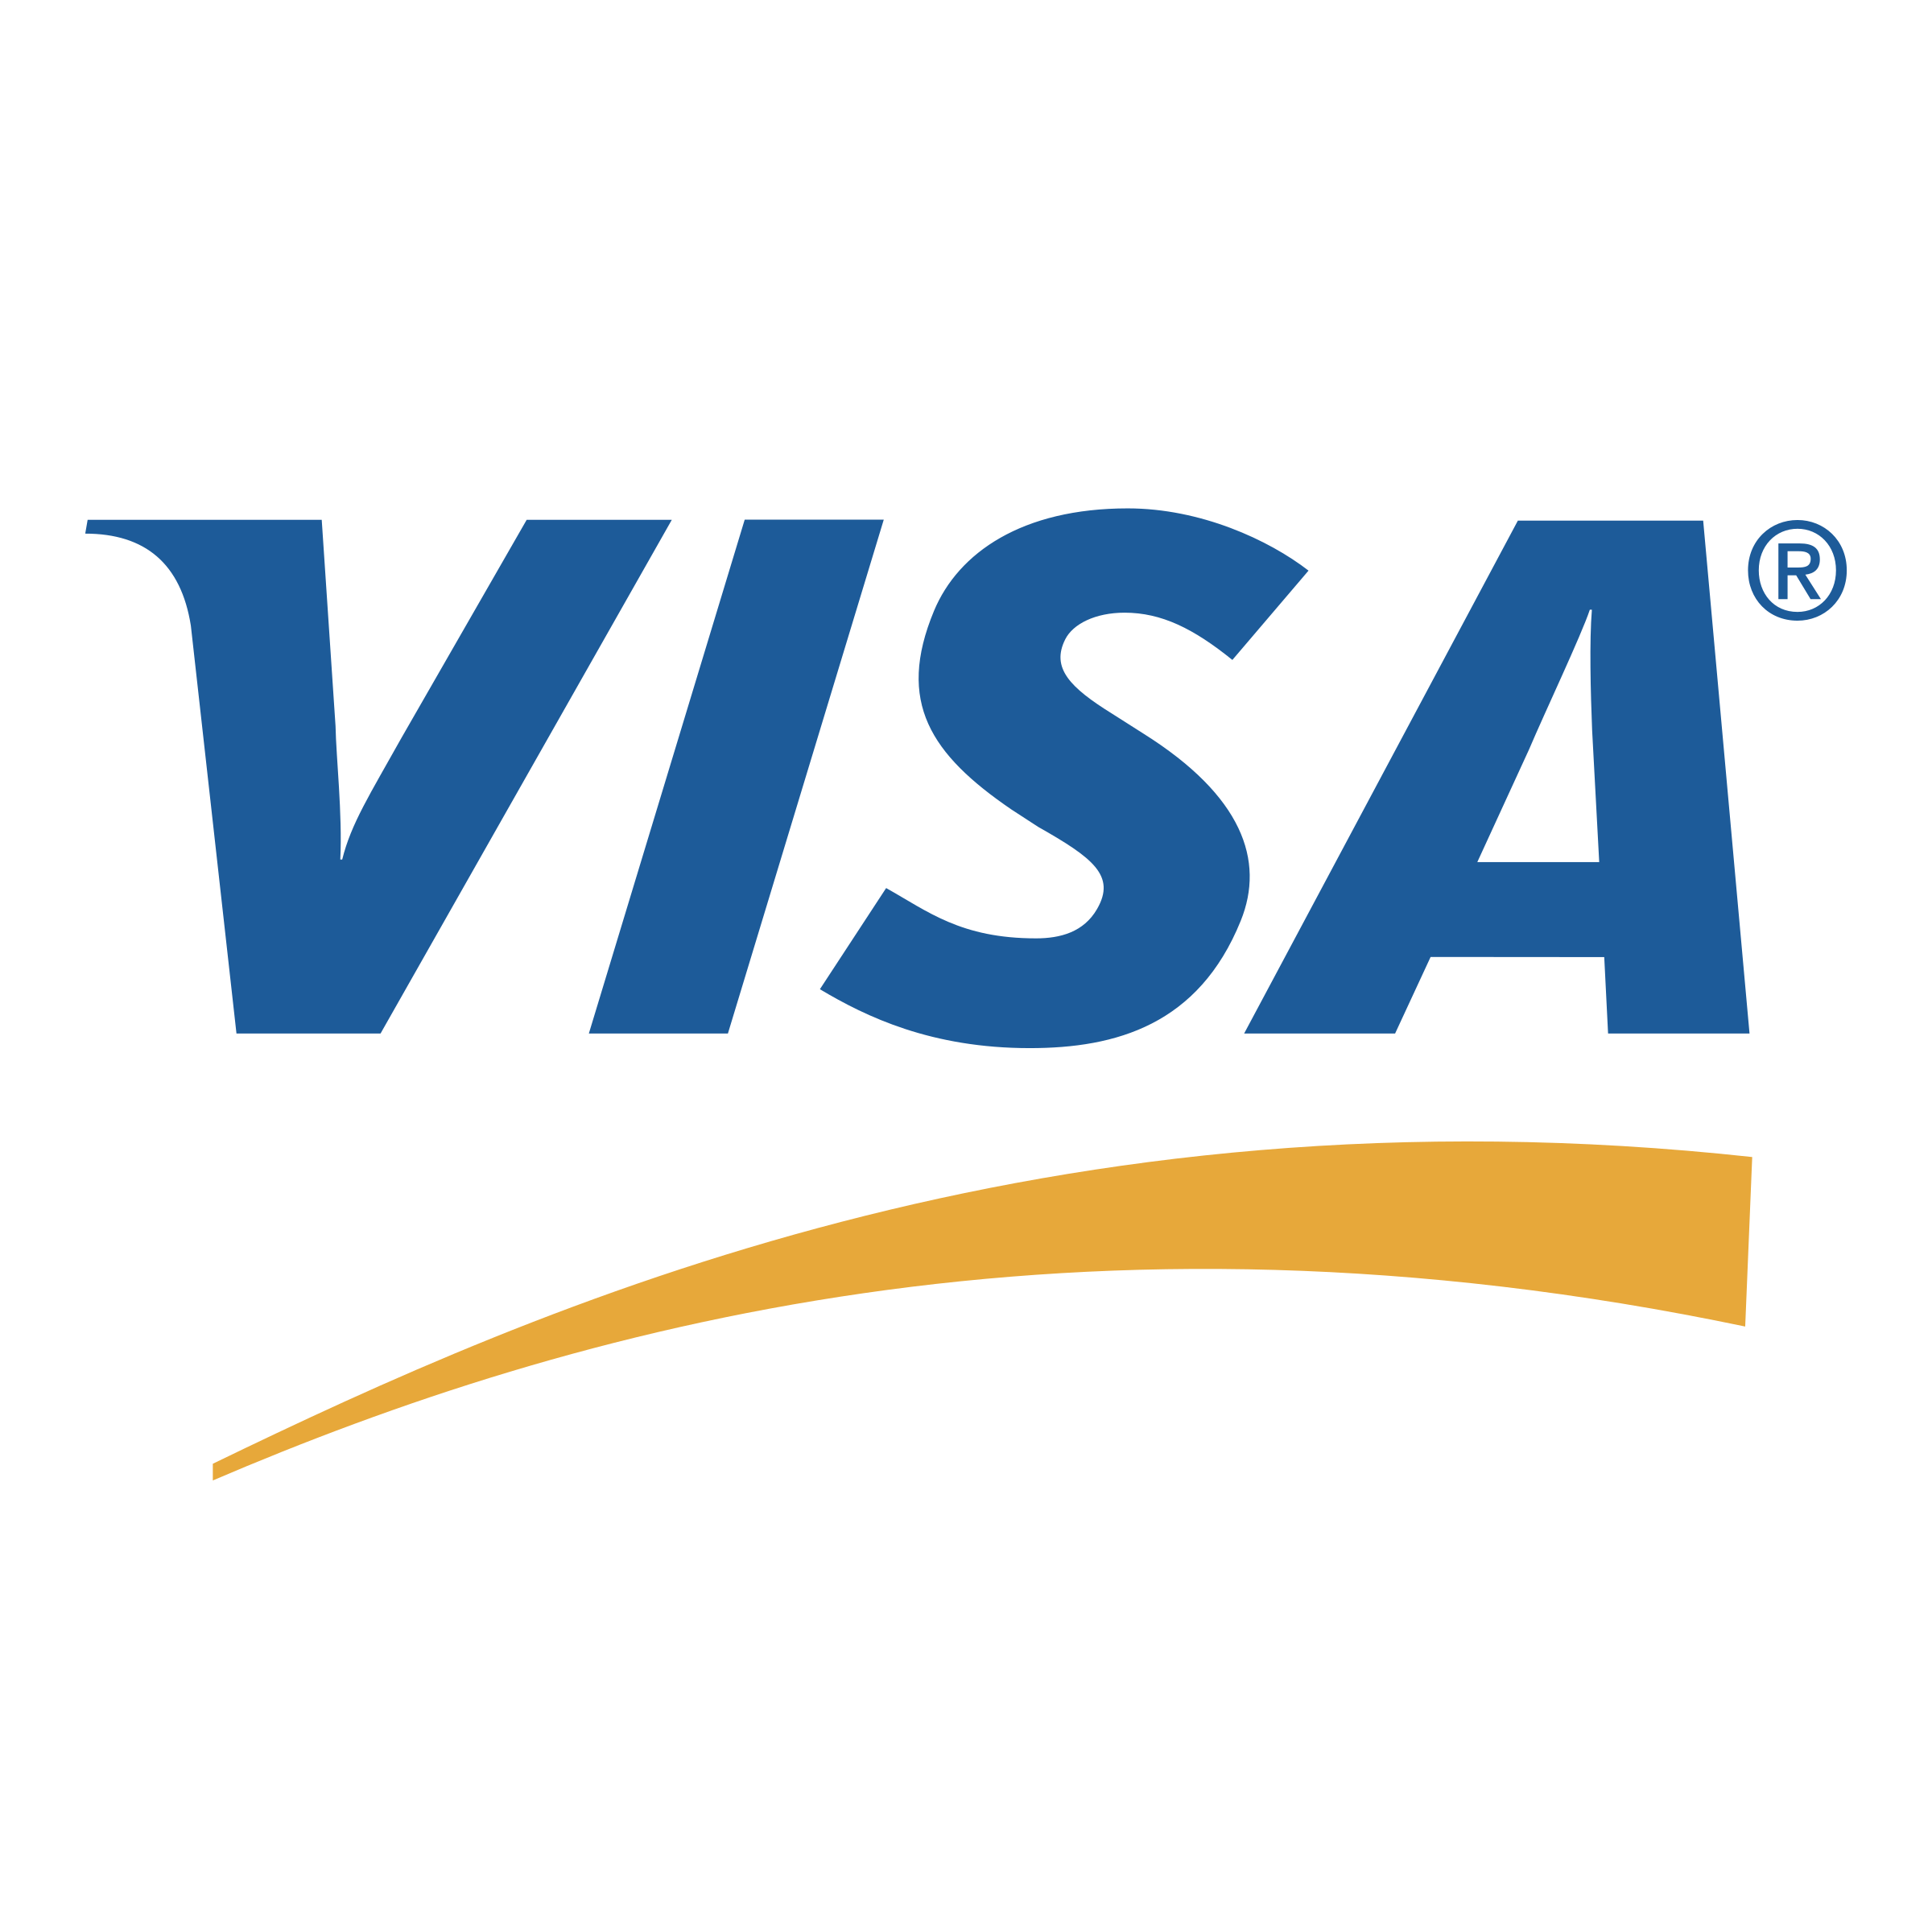 visa-5-logo-png-transparent.png